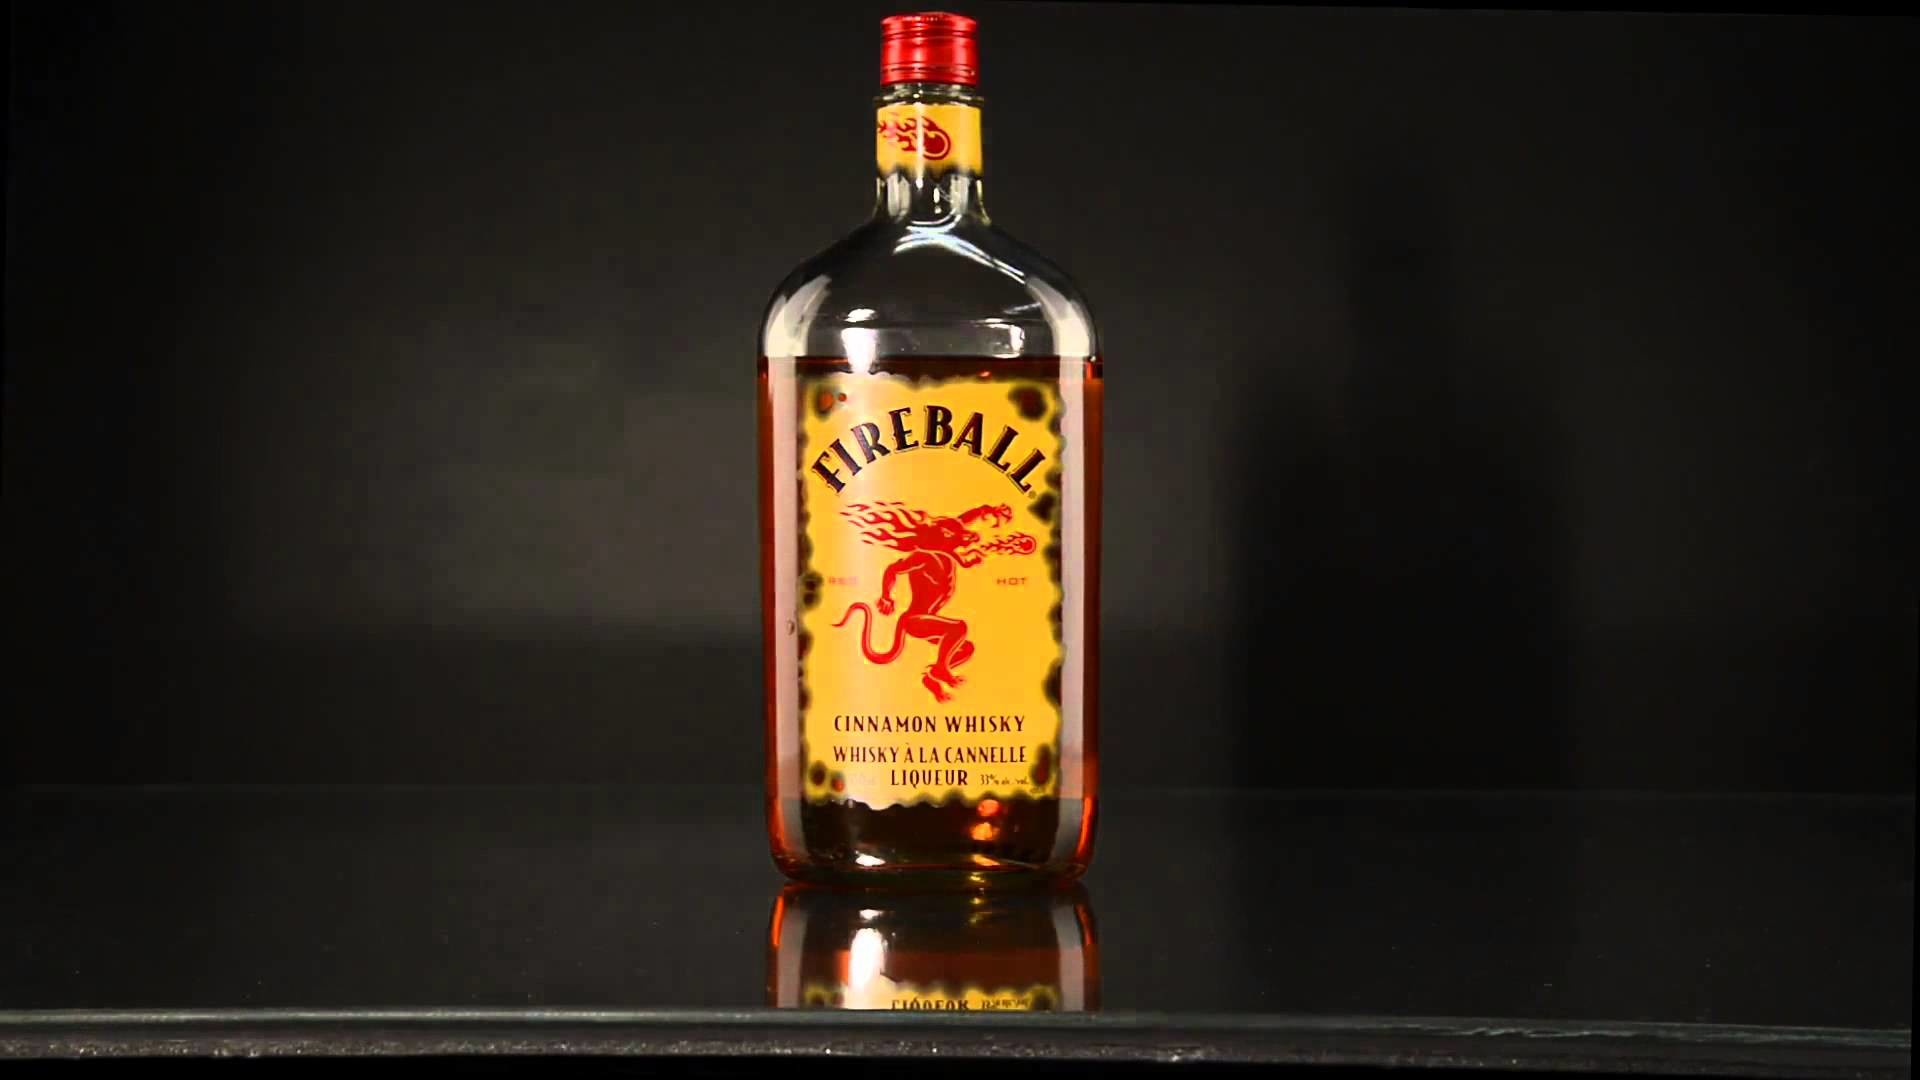 Fireball Whisky Advert Full HD